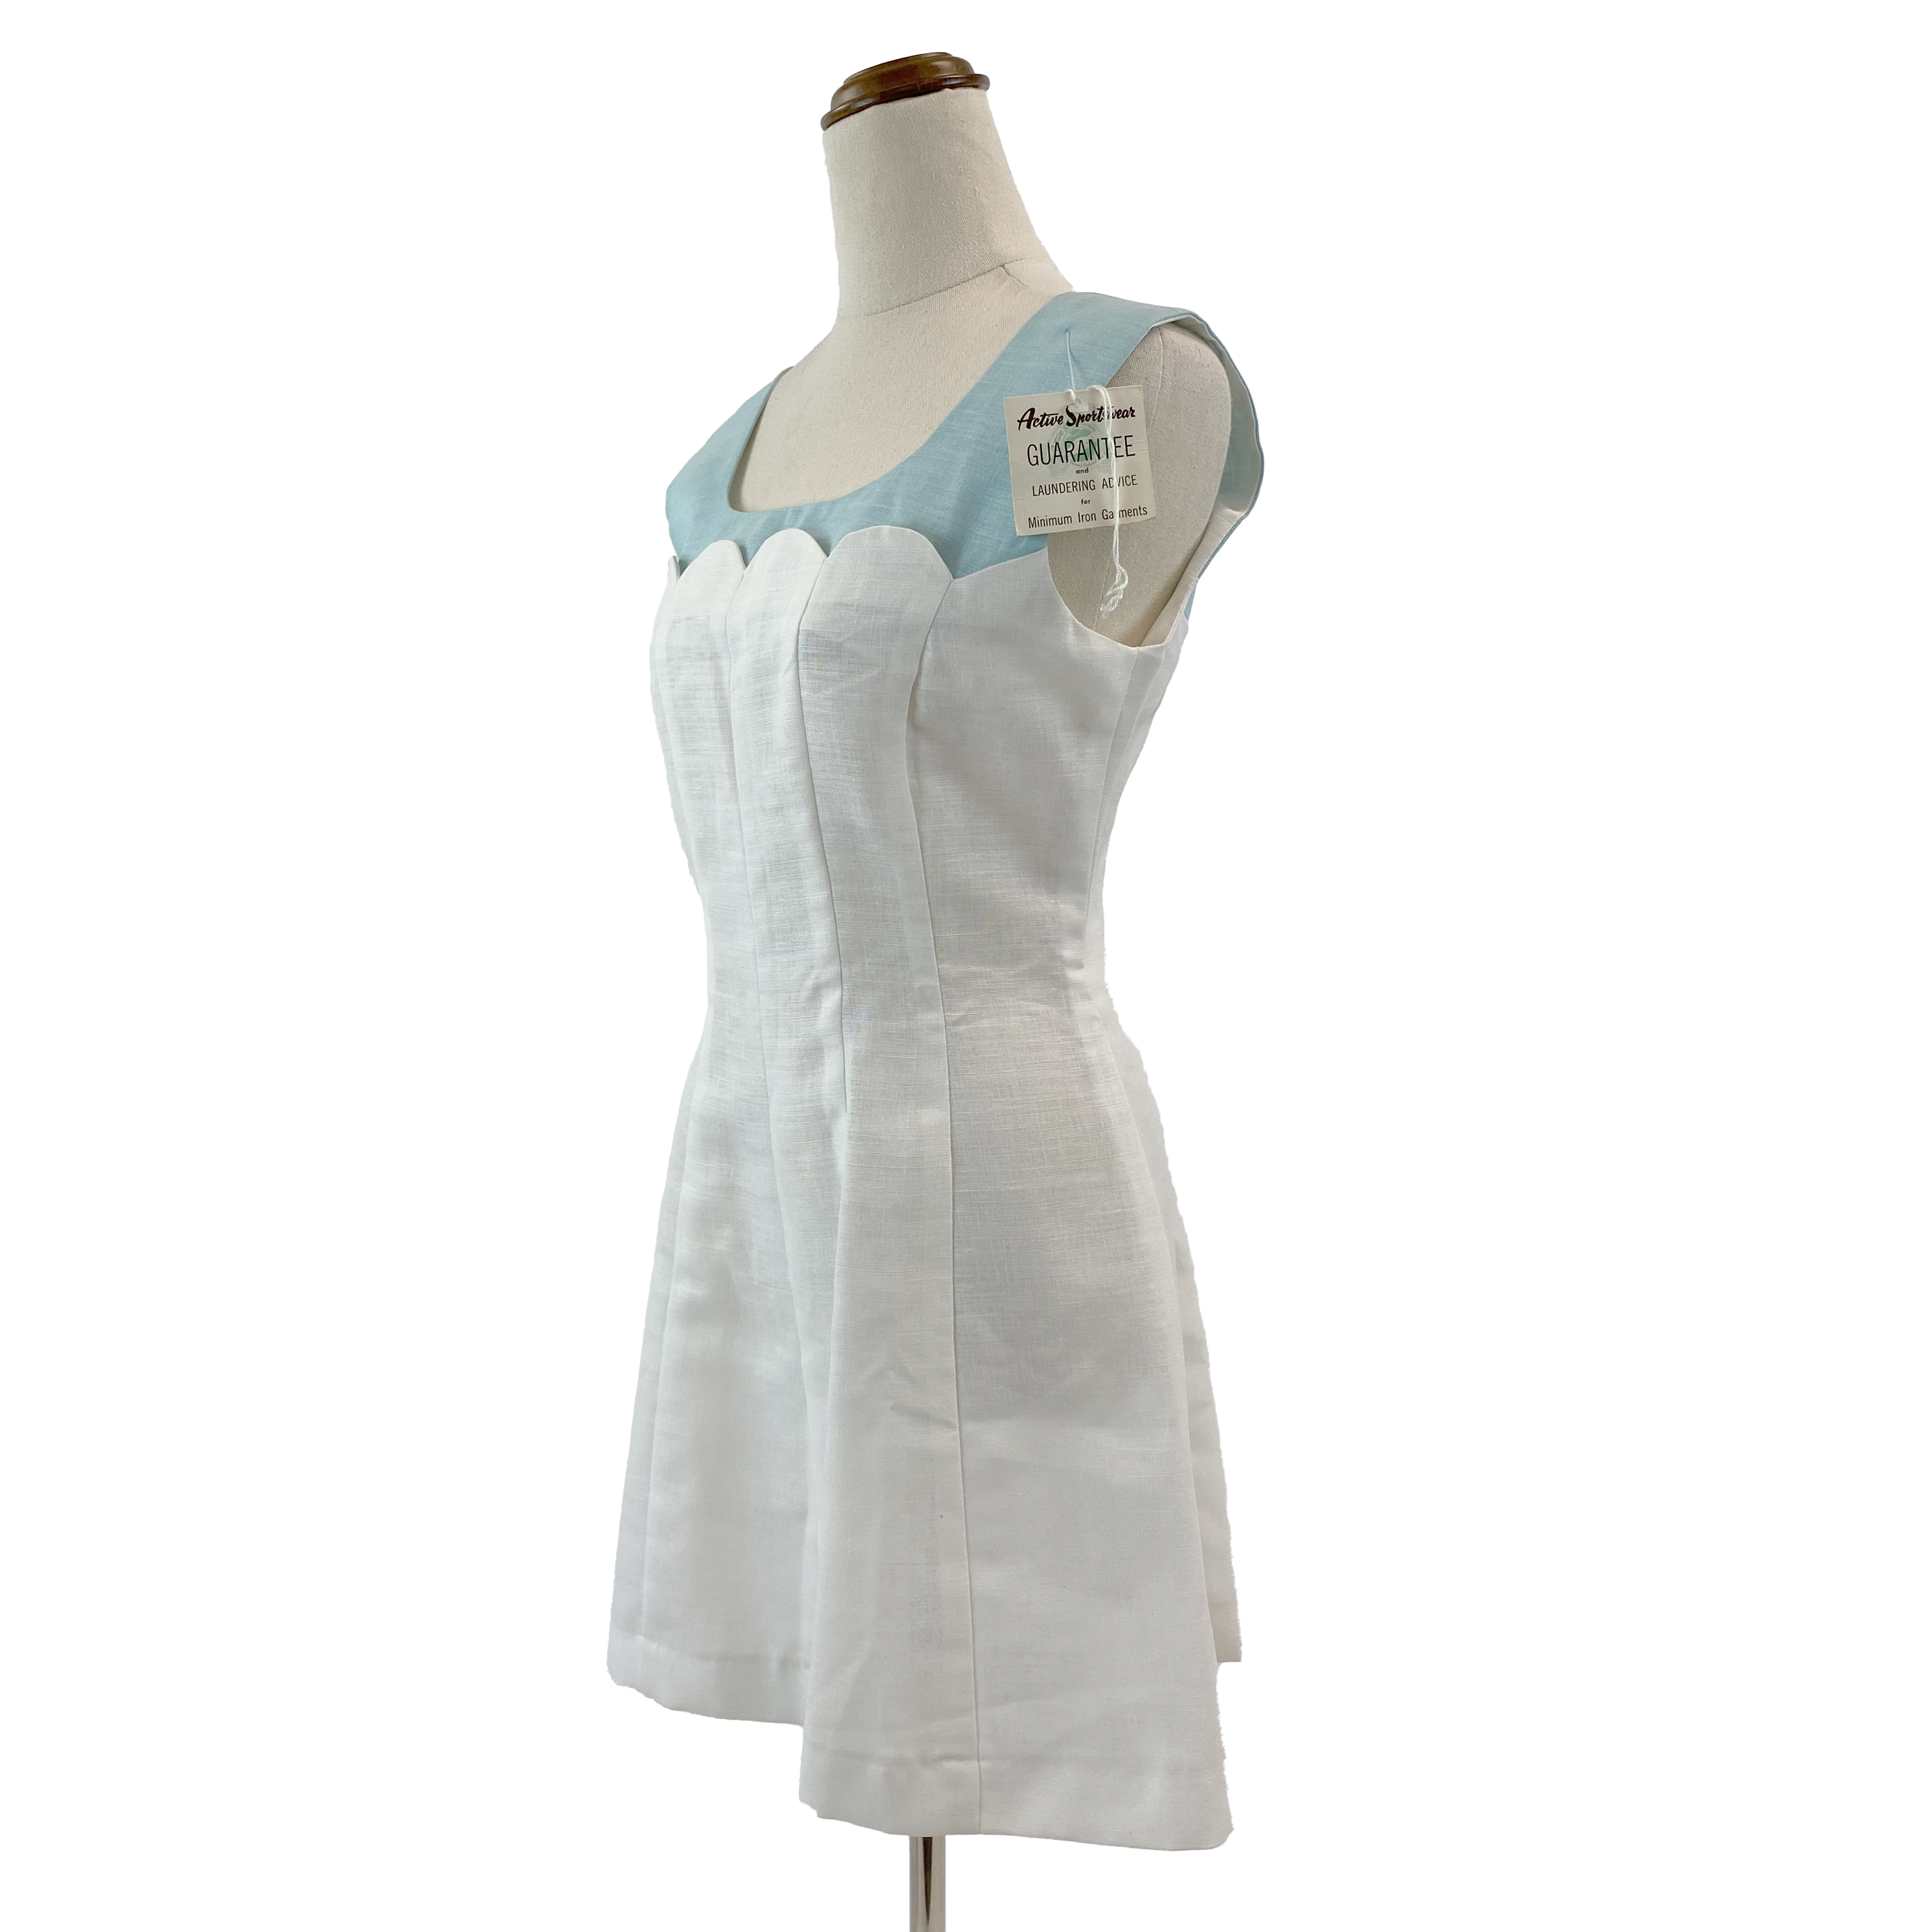 Vintage Caribbean White/Blue Tailored Tennis Dress